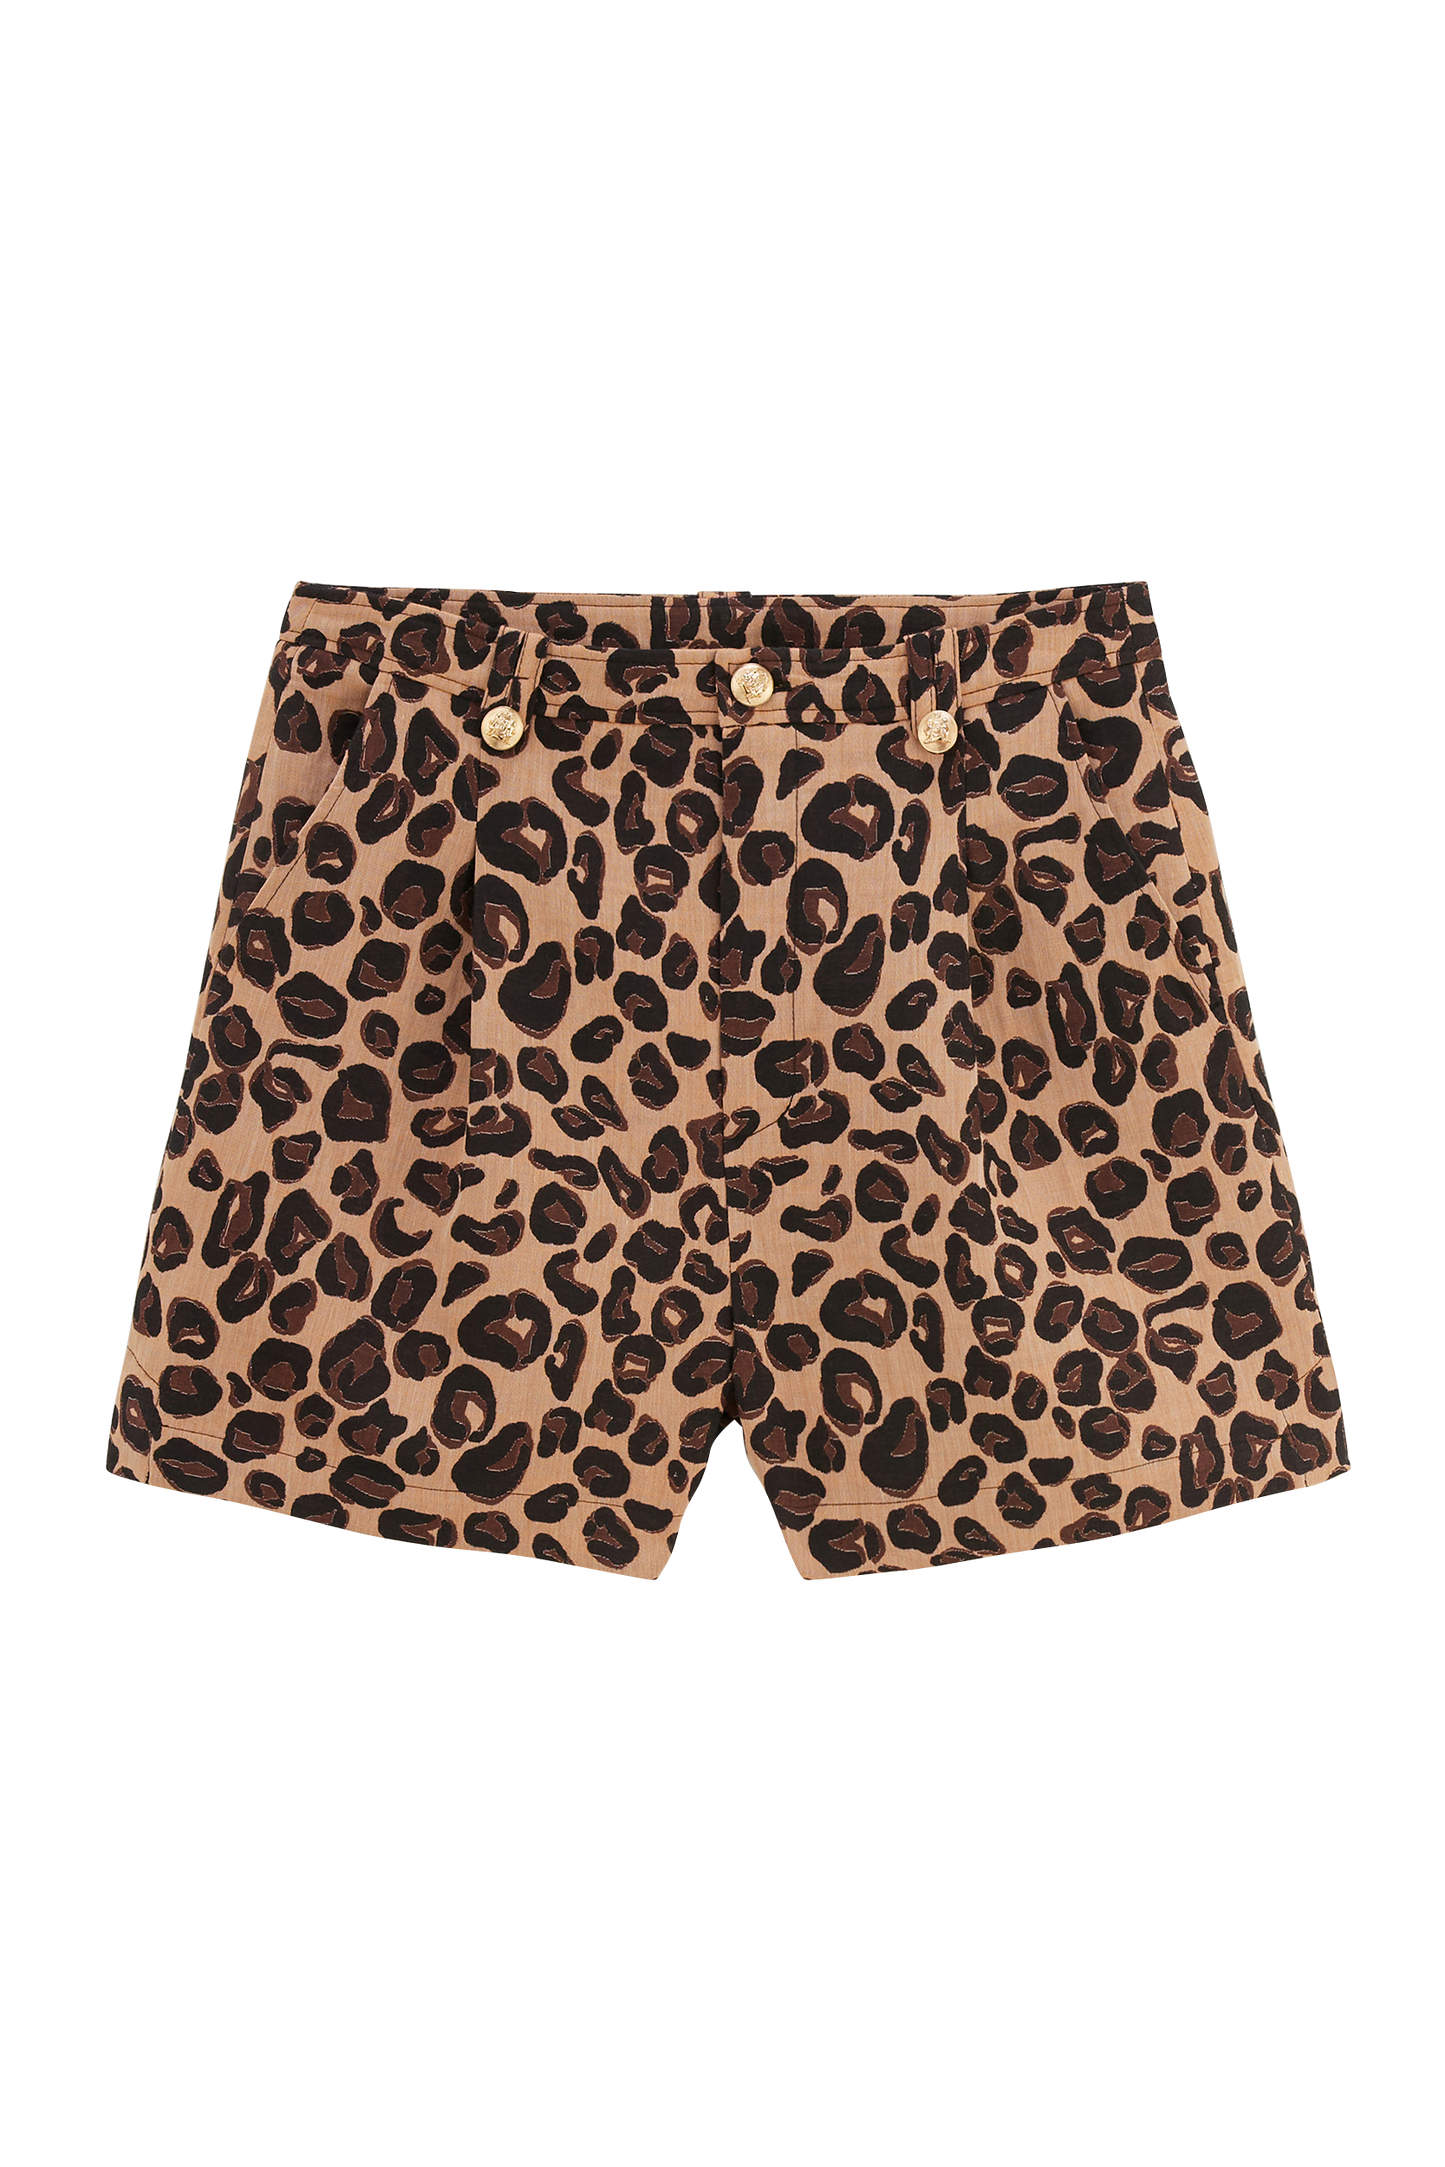 Simon leopard shorts